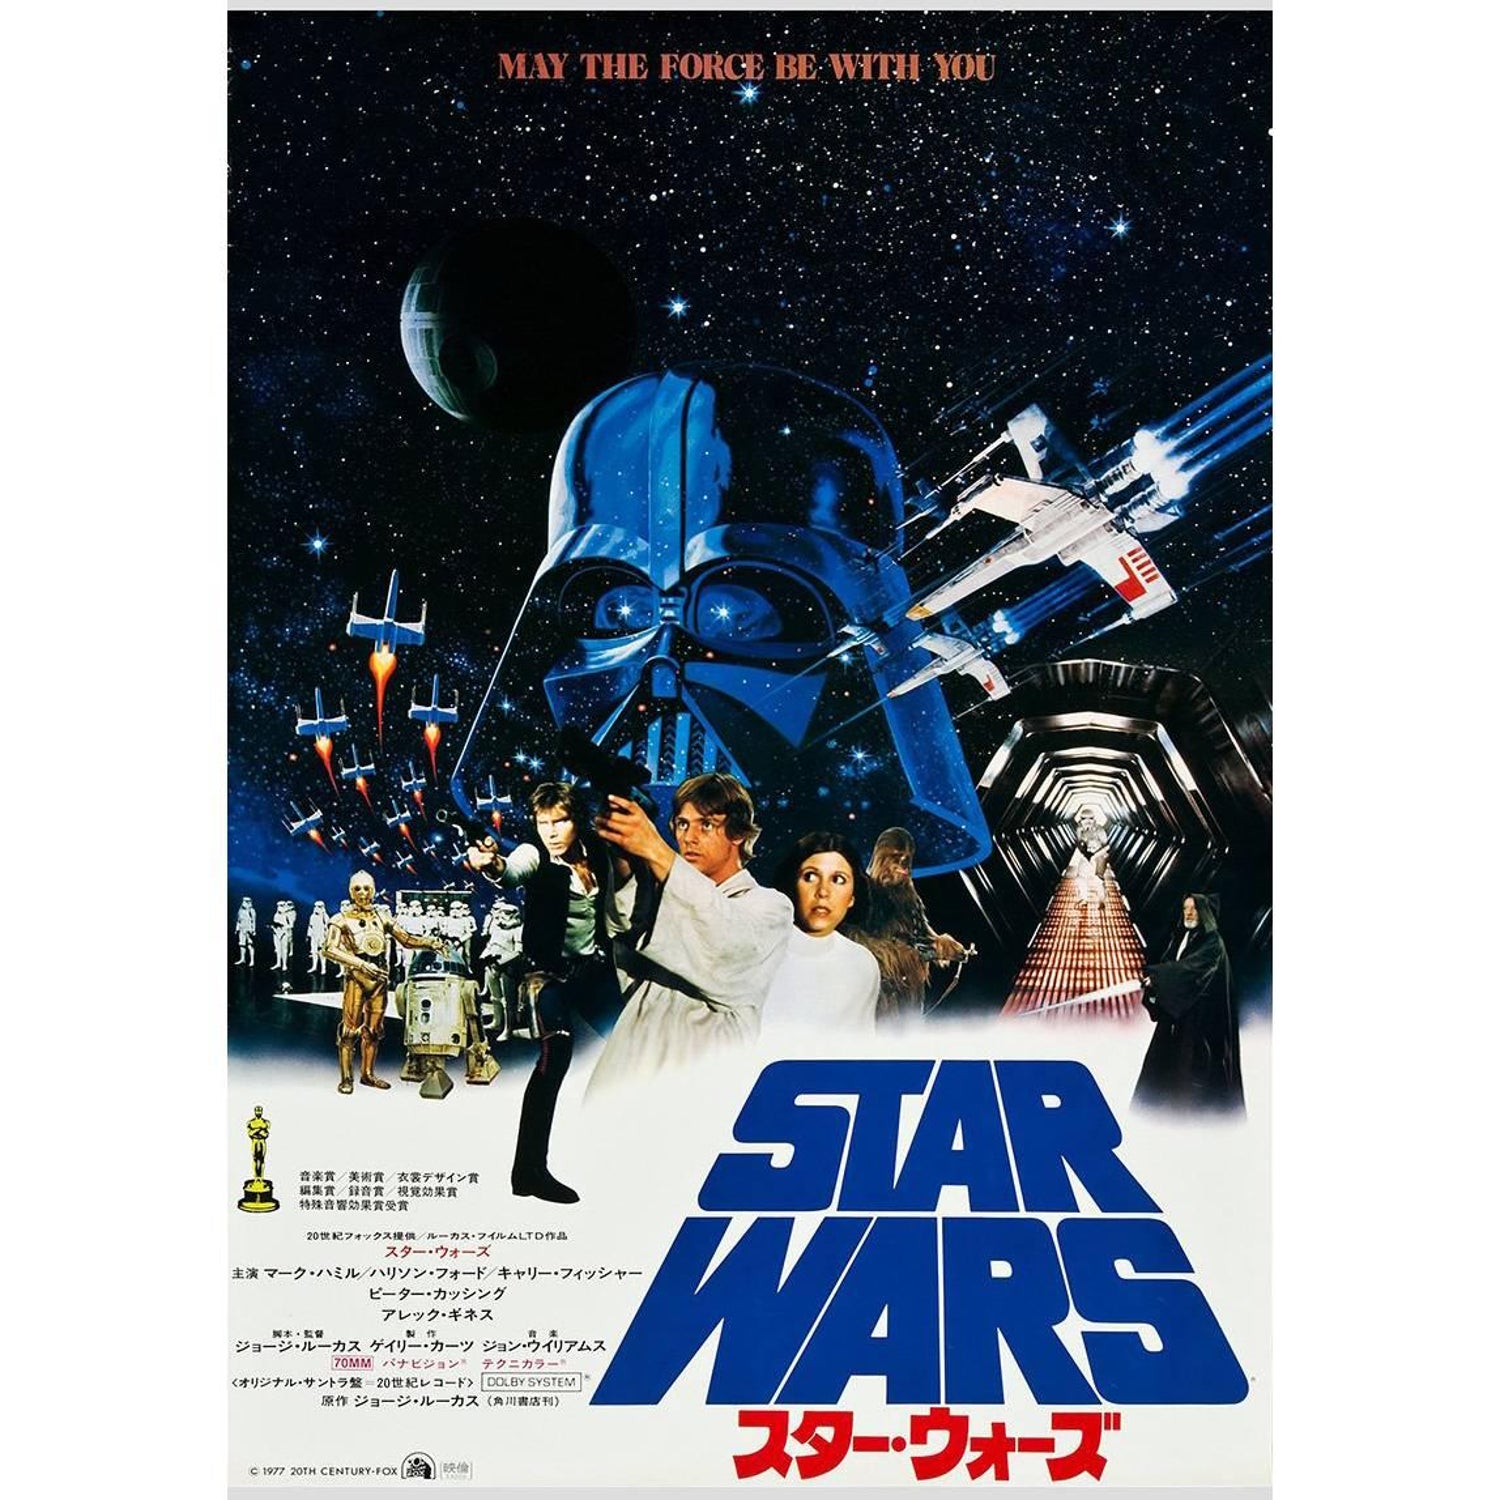 Star Wars" Film Poster, 1977 For Sale at 1stDibs